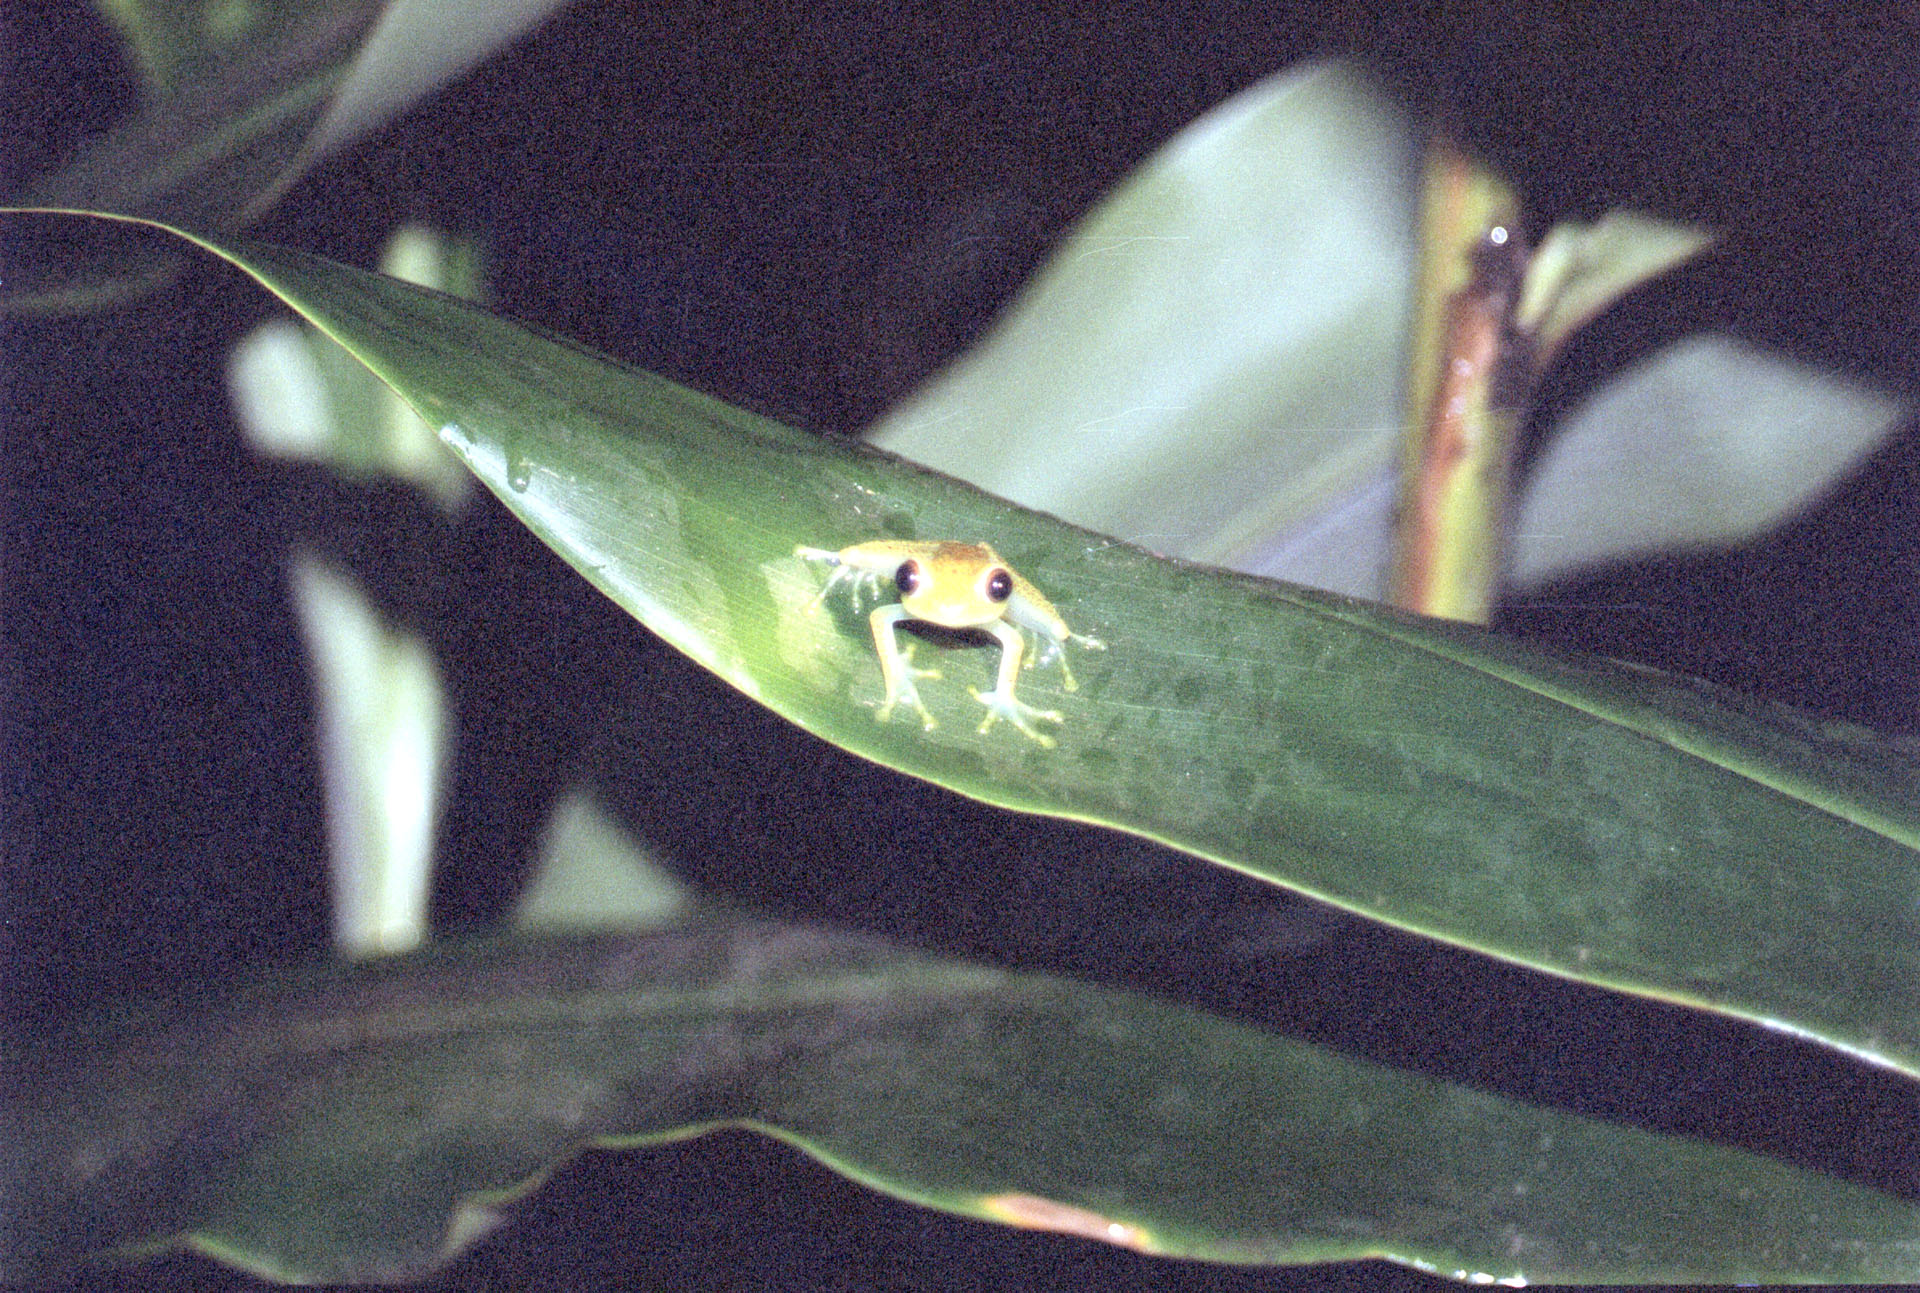 Réserve spéciale d'Analamazoatra - Madagascar